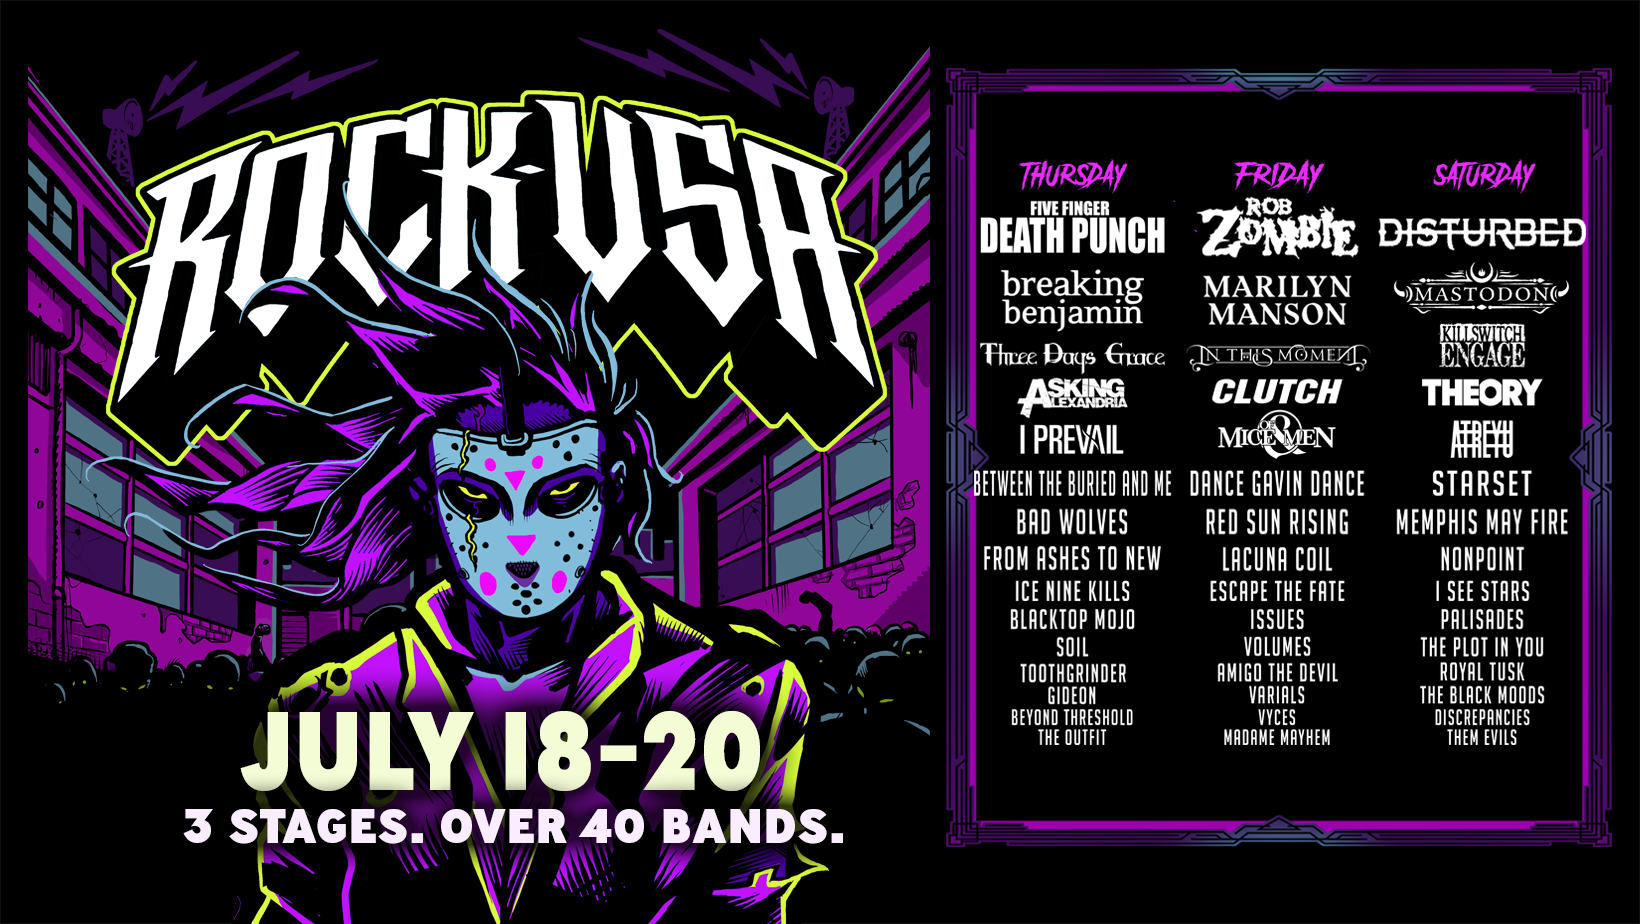 ROCK USA returning to Oshkosh, Wisconsin for its 9th year... Music